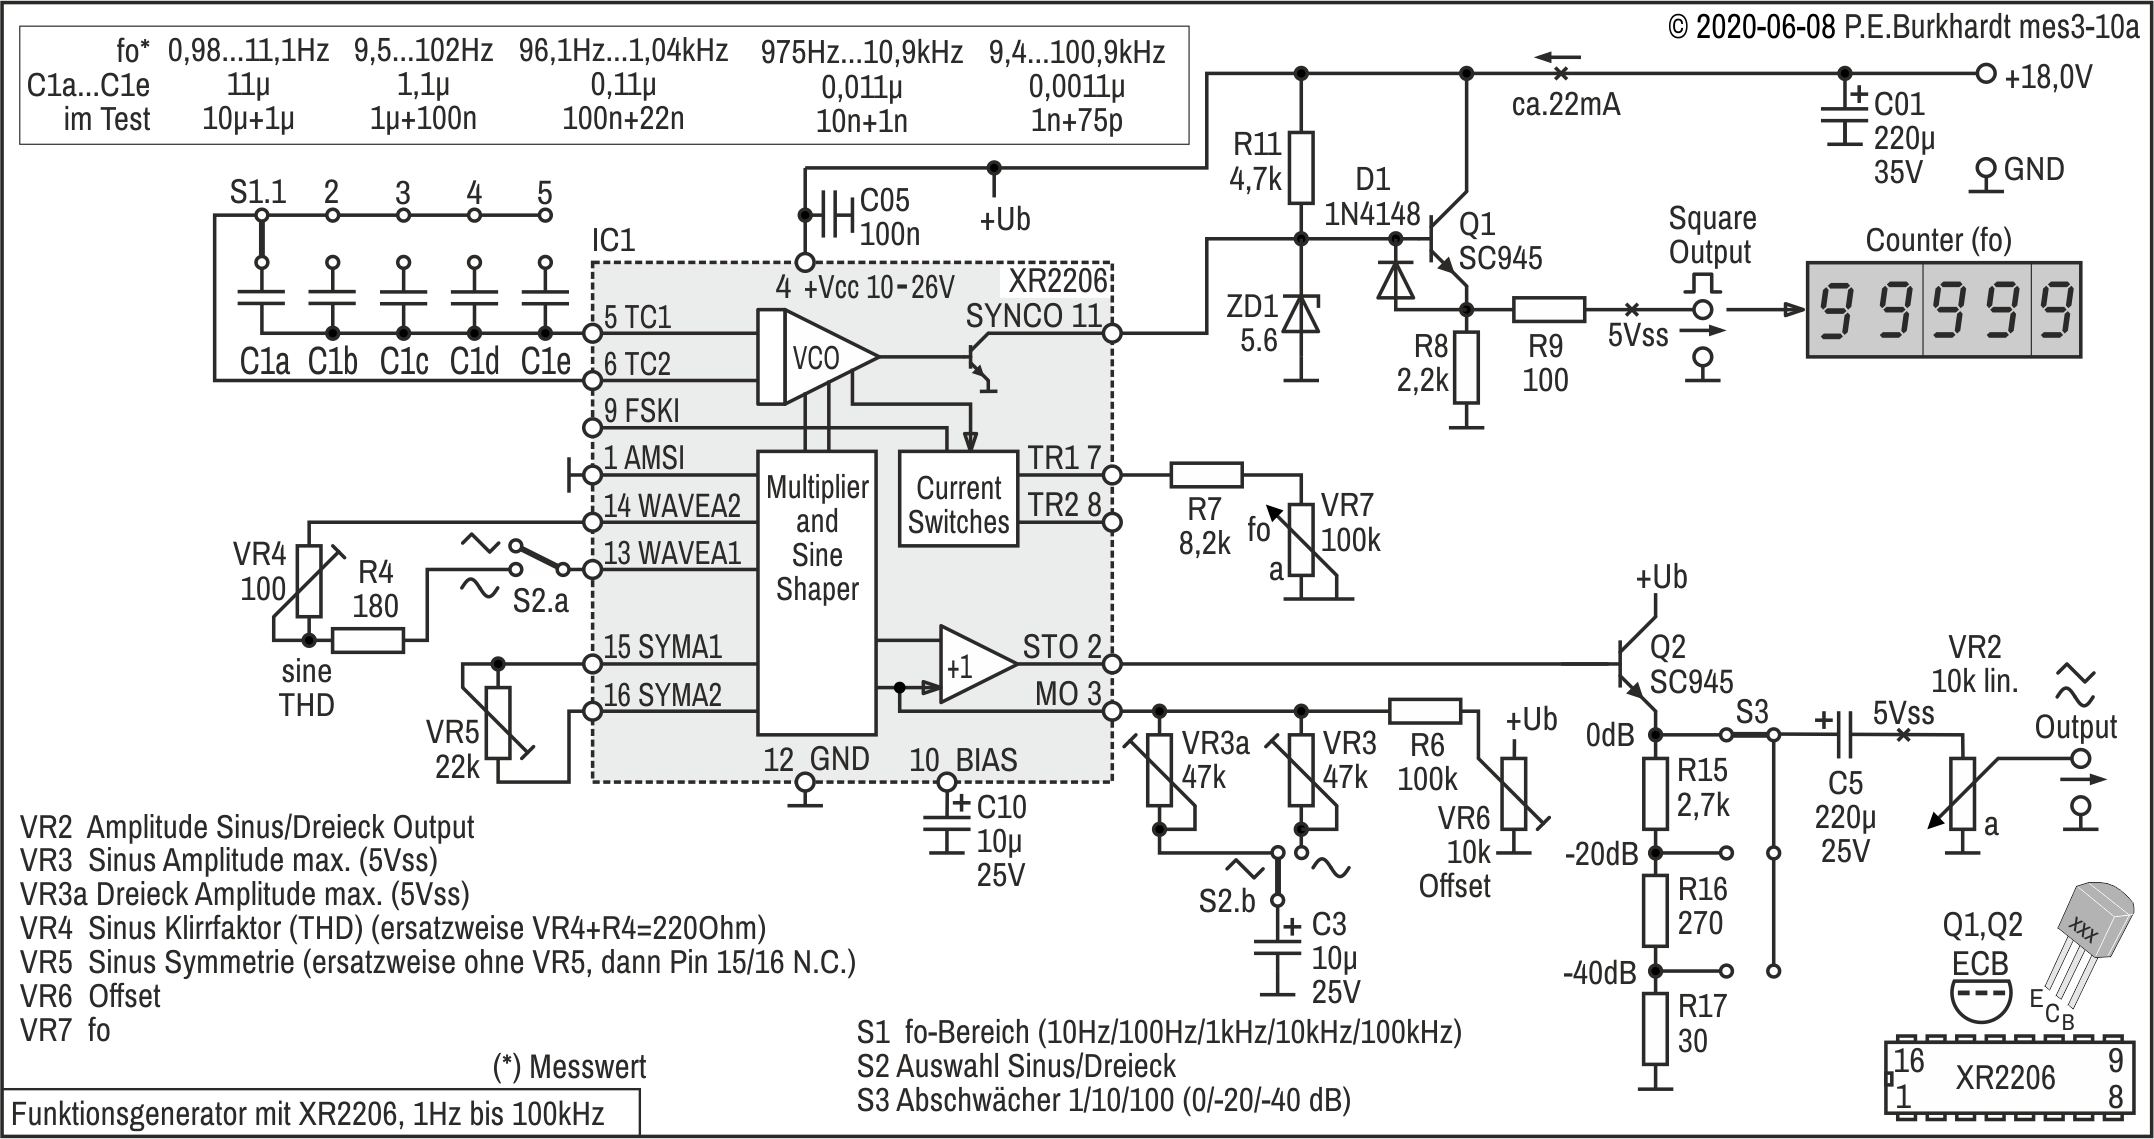 Funktionsgenerator XR2206, 1 Hz bis 100 kHz